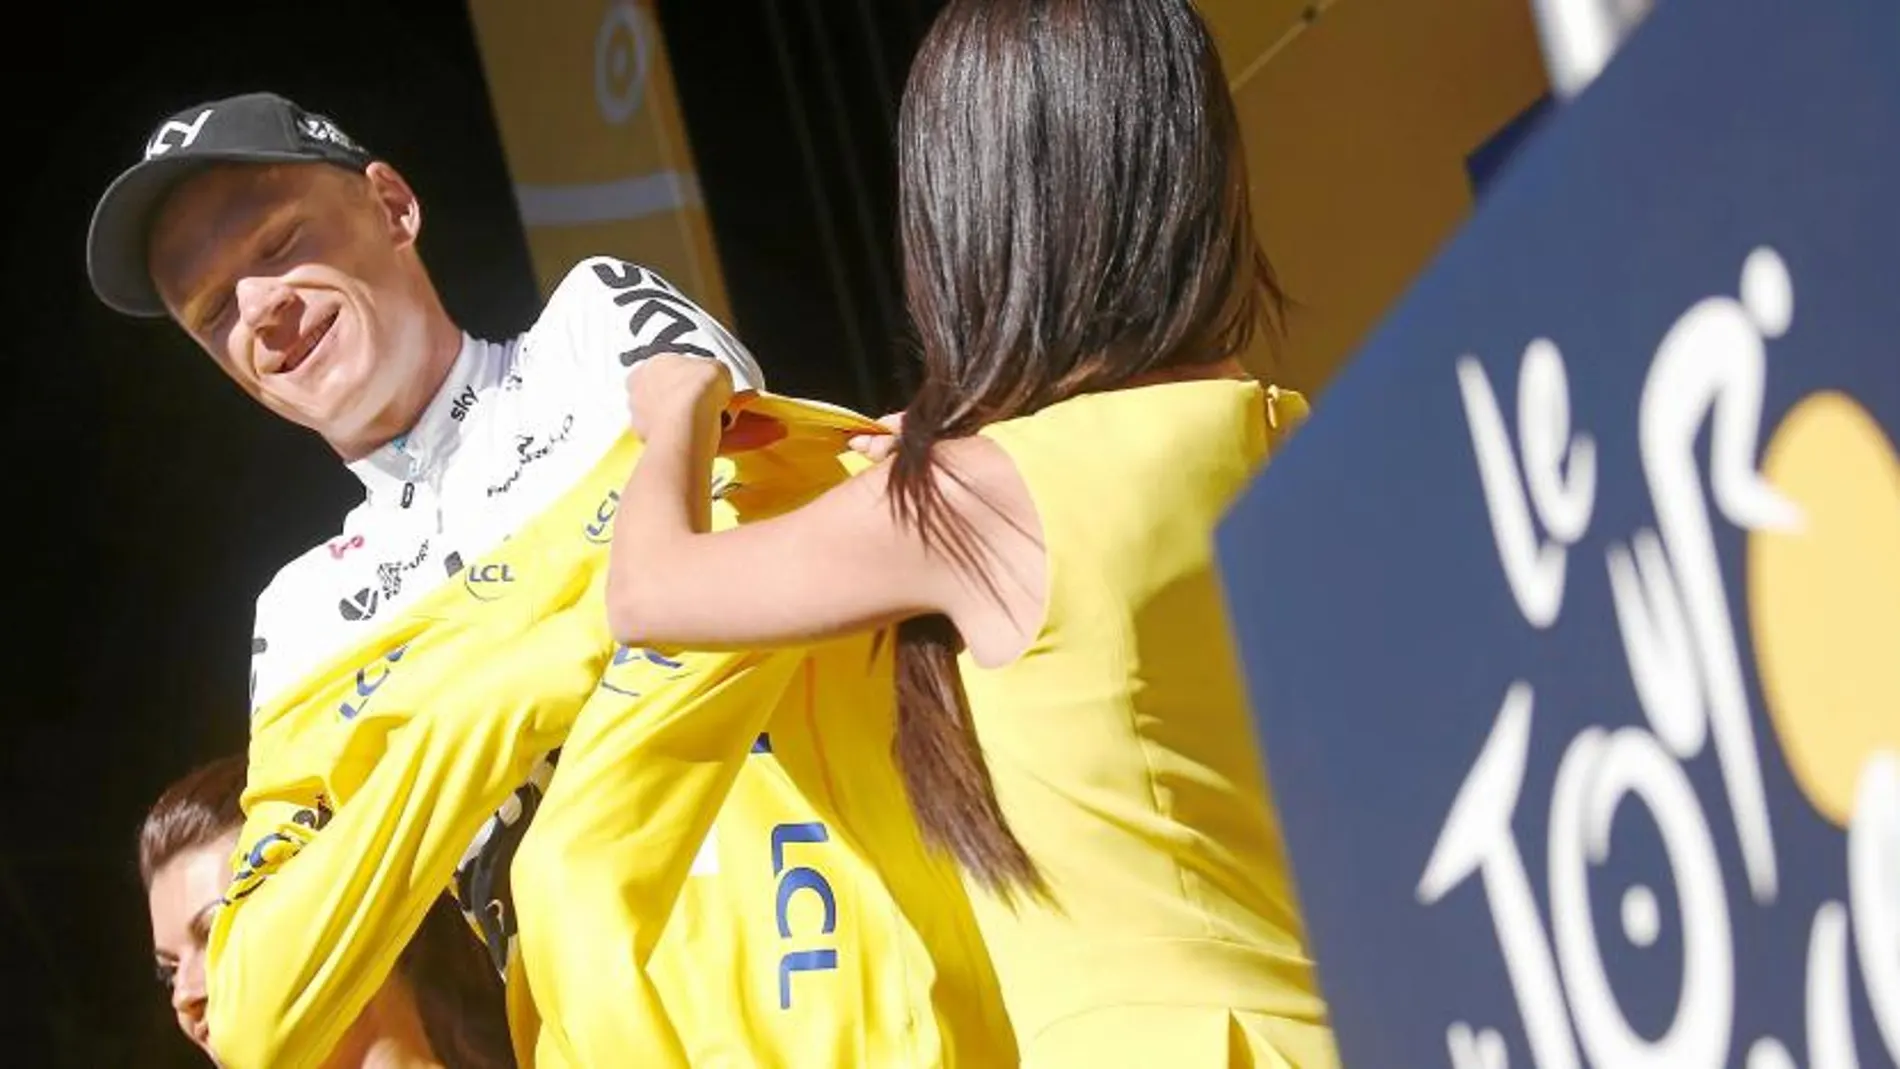 Michael Matthews celebra su victoria en la décimocuarta etapa del Tour de Francia en Rodez.